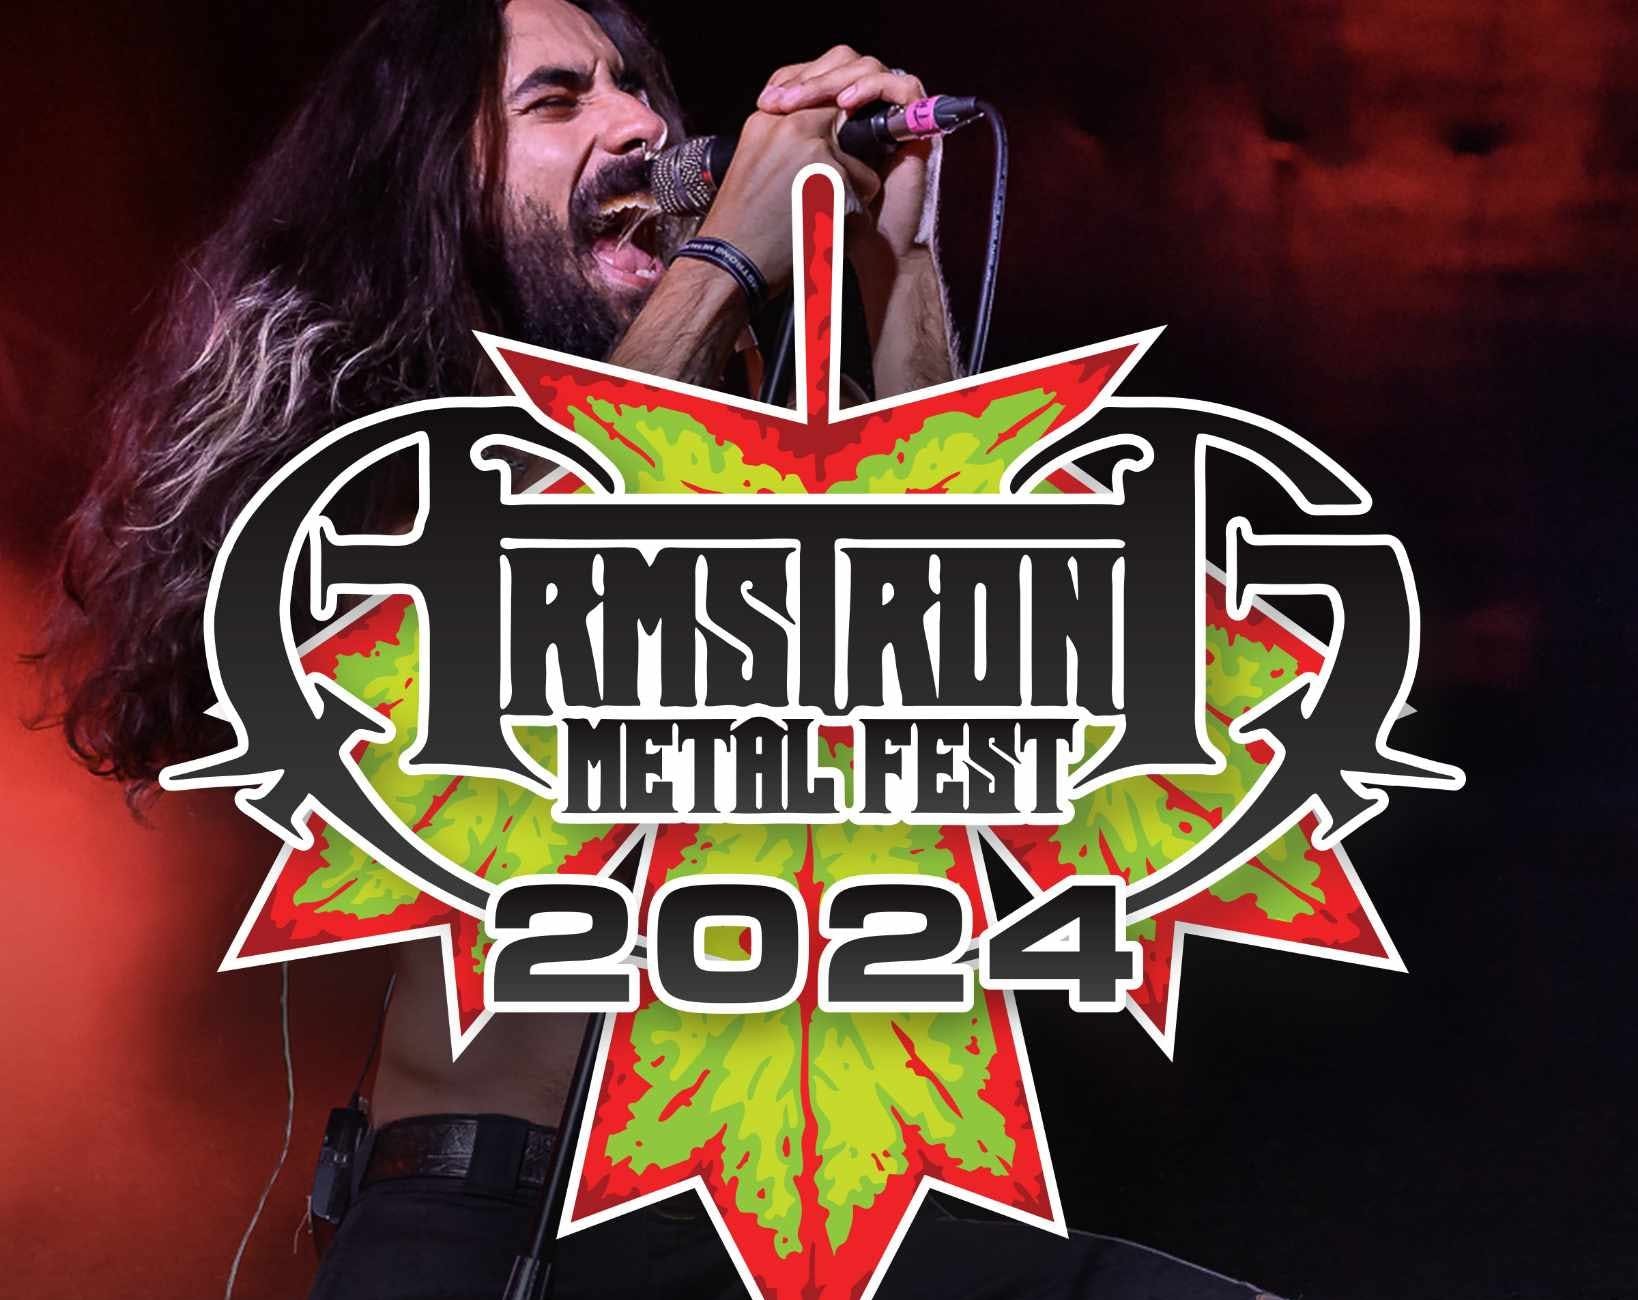 Armstrong Metalfest 2024